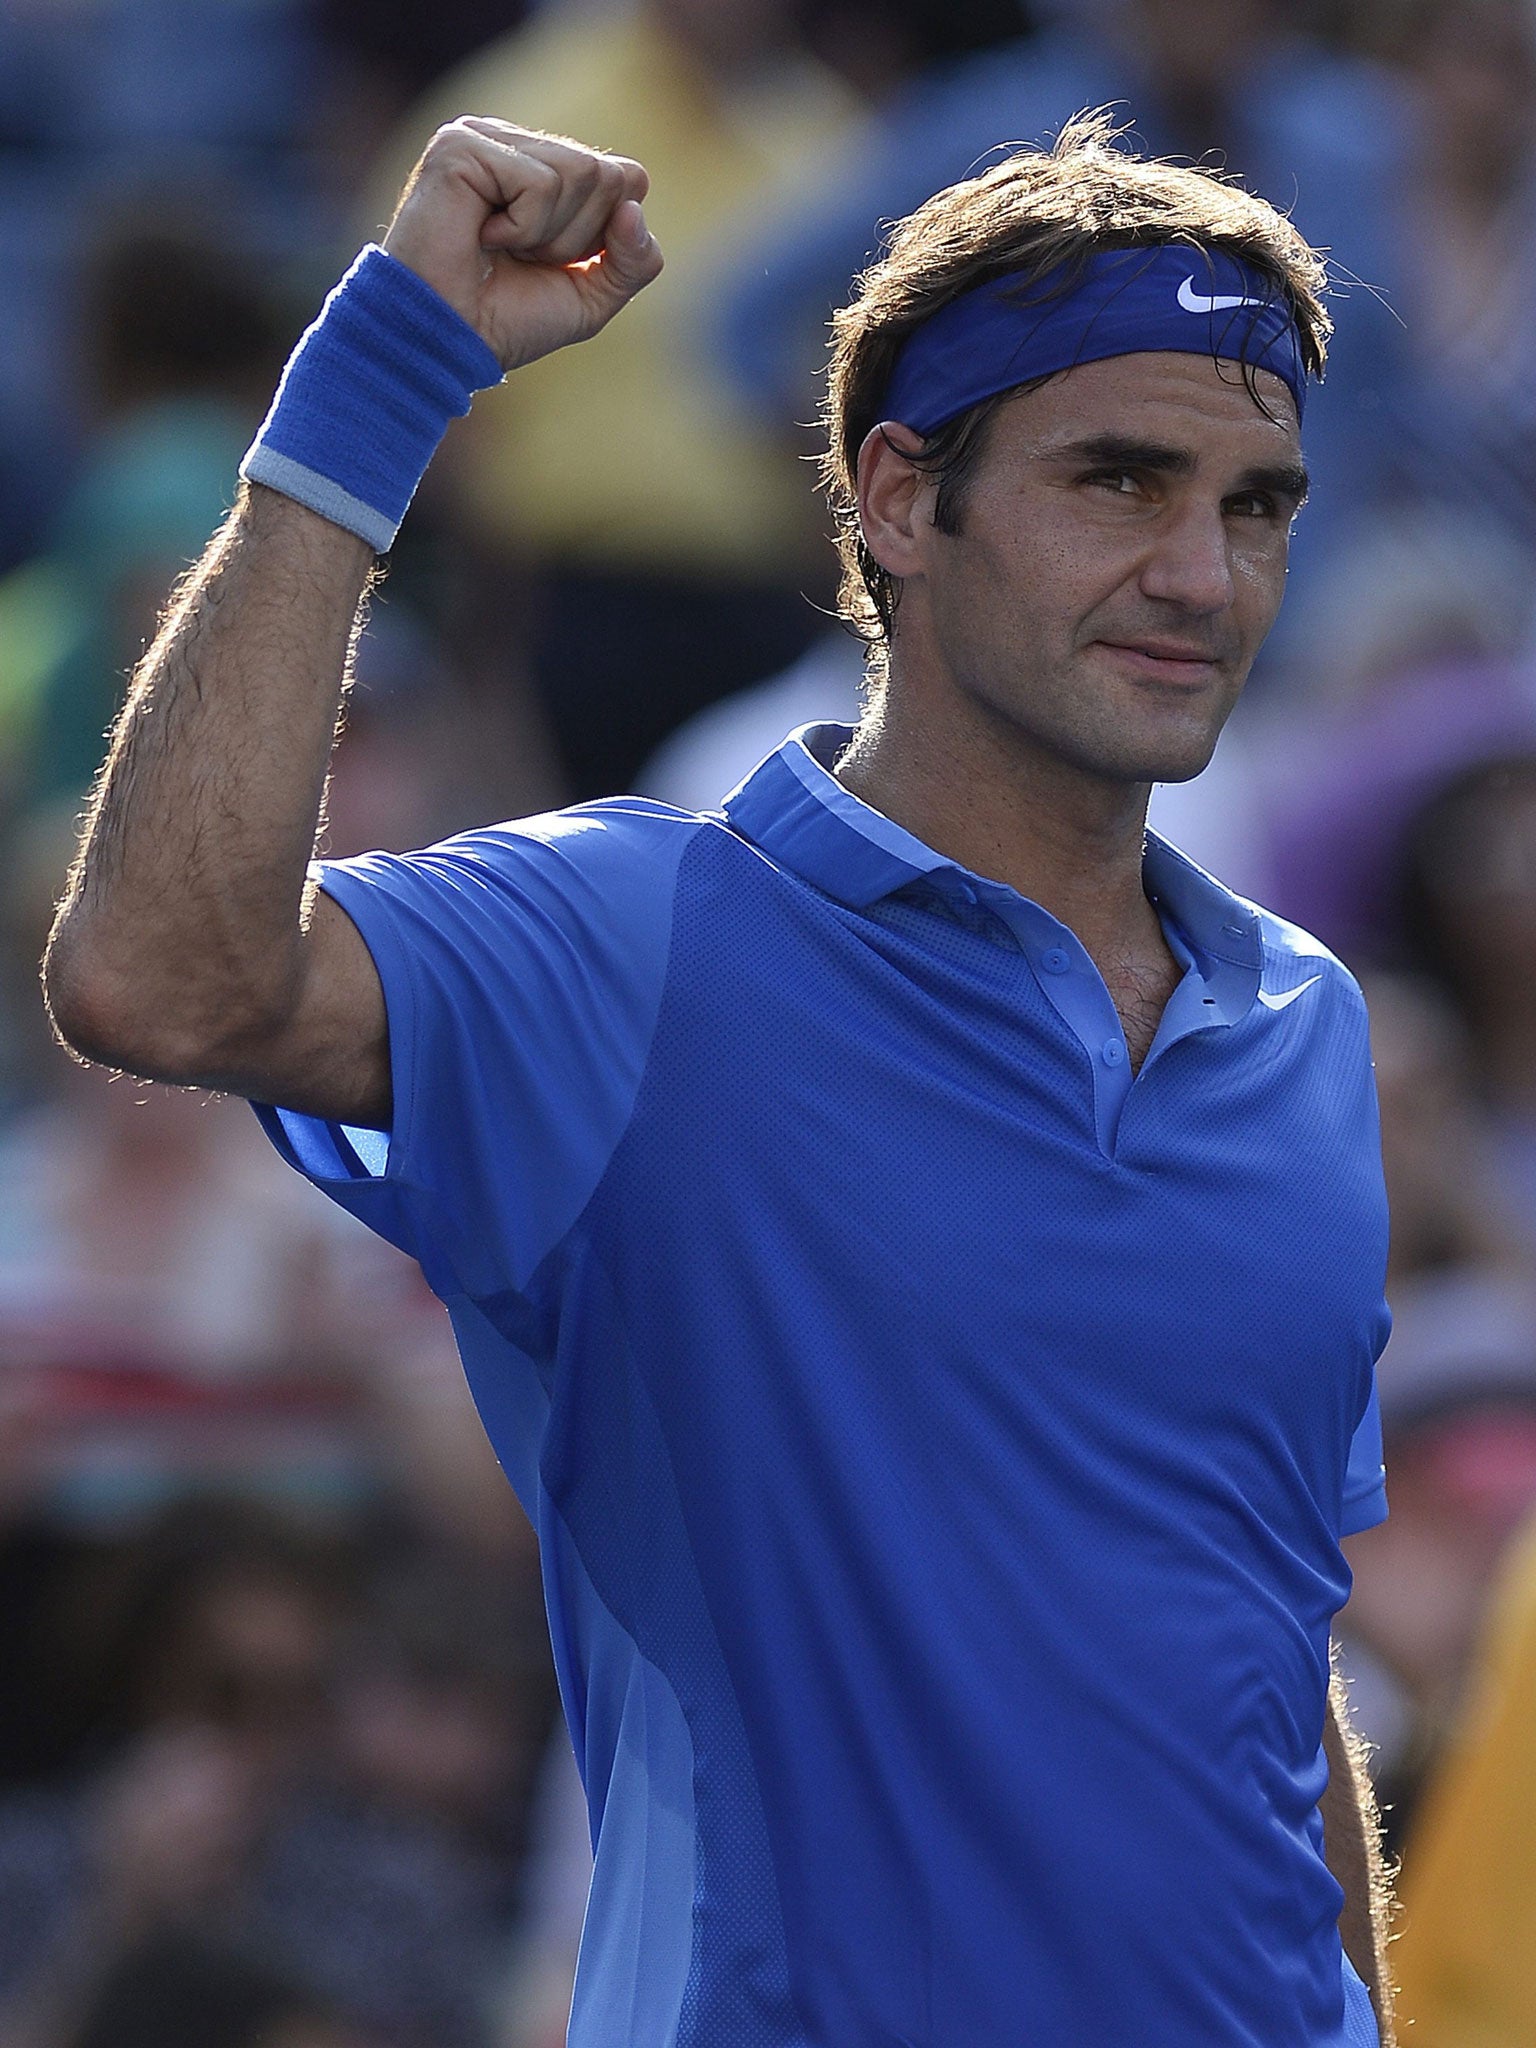 Roger Federer won his match against Grega Zemlja